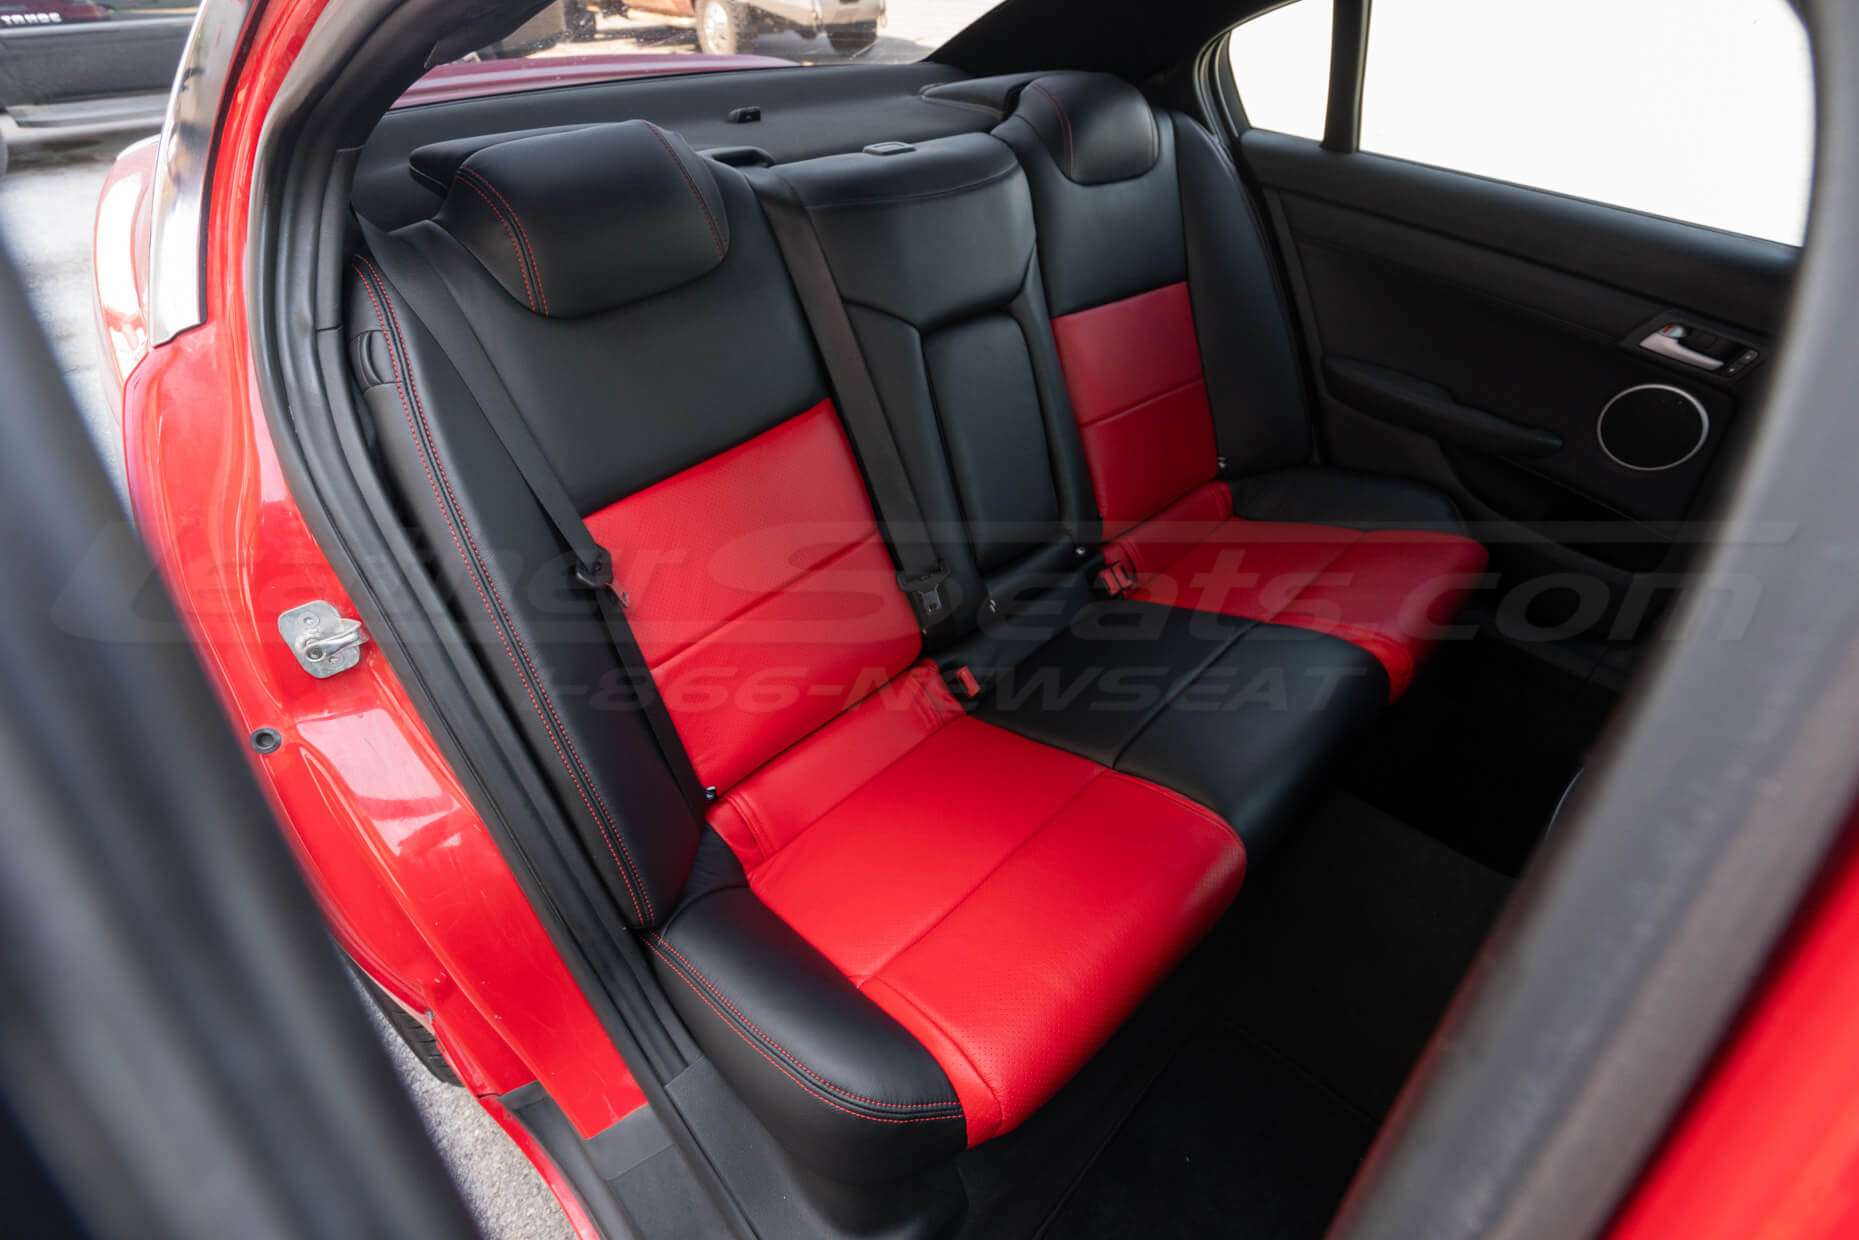 2008-2009 Pontiac G8 leather seats - Rear seats installed - passenger side